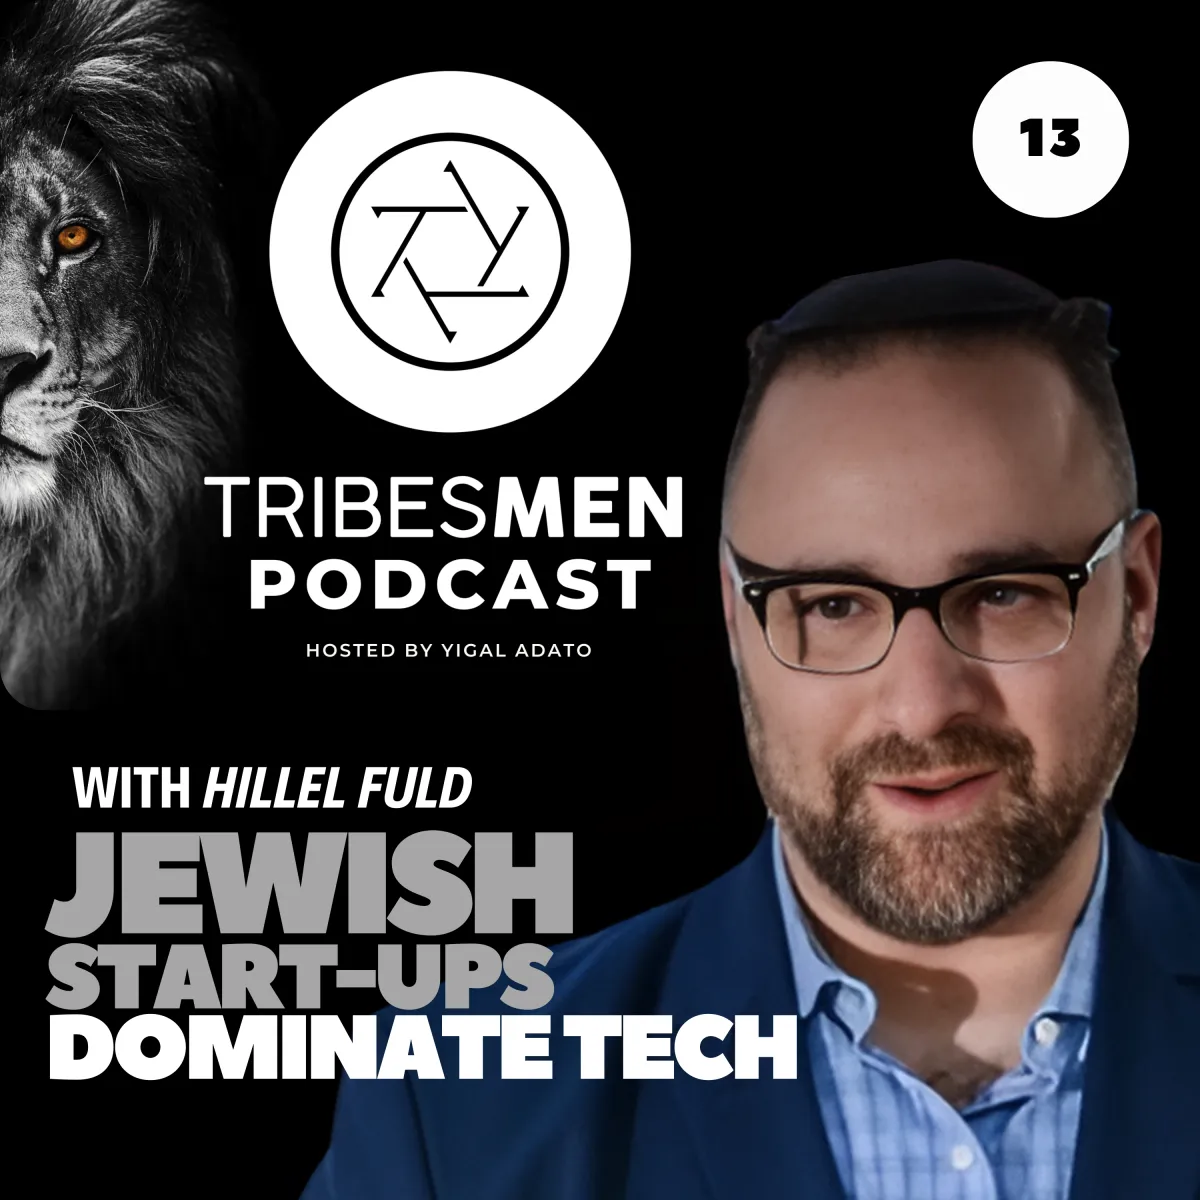 Tribesmen Podcast Episode 13 with Hillel Fuld